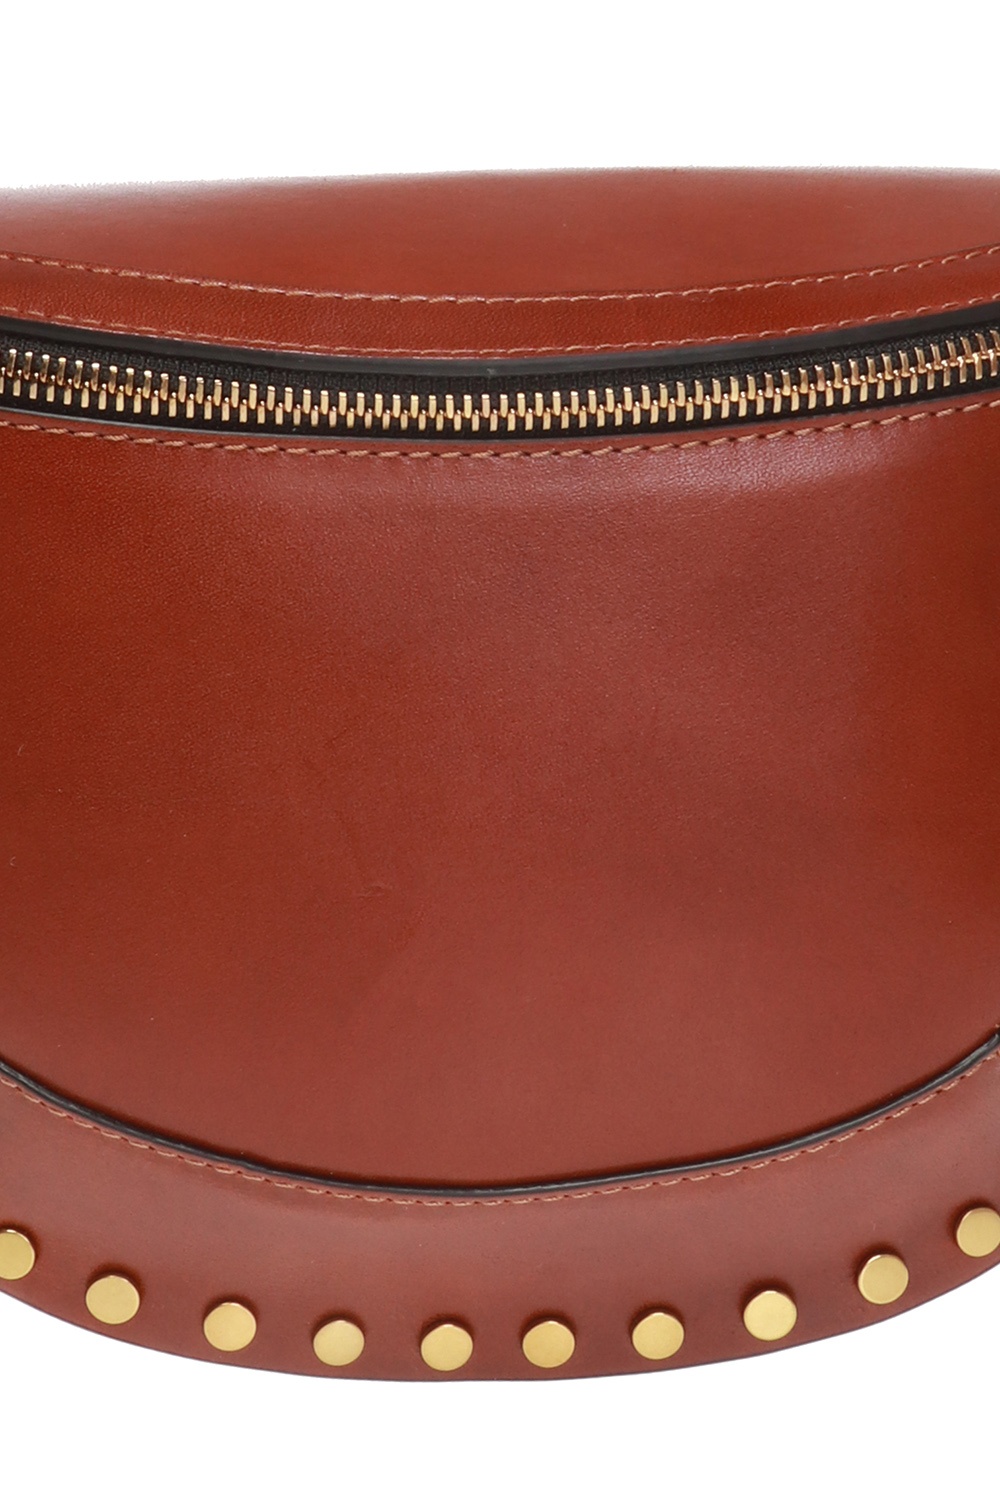 Studded 'Skano' belt bag Isabel Marant - Vitkac Italy